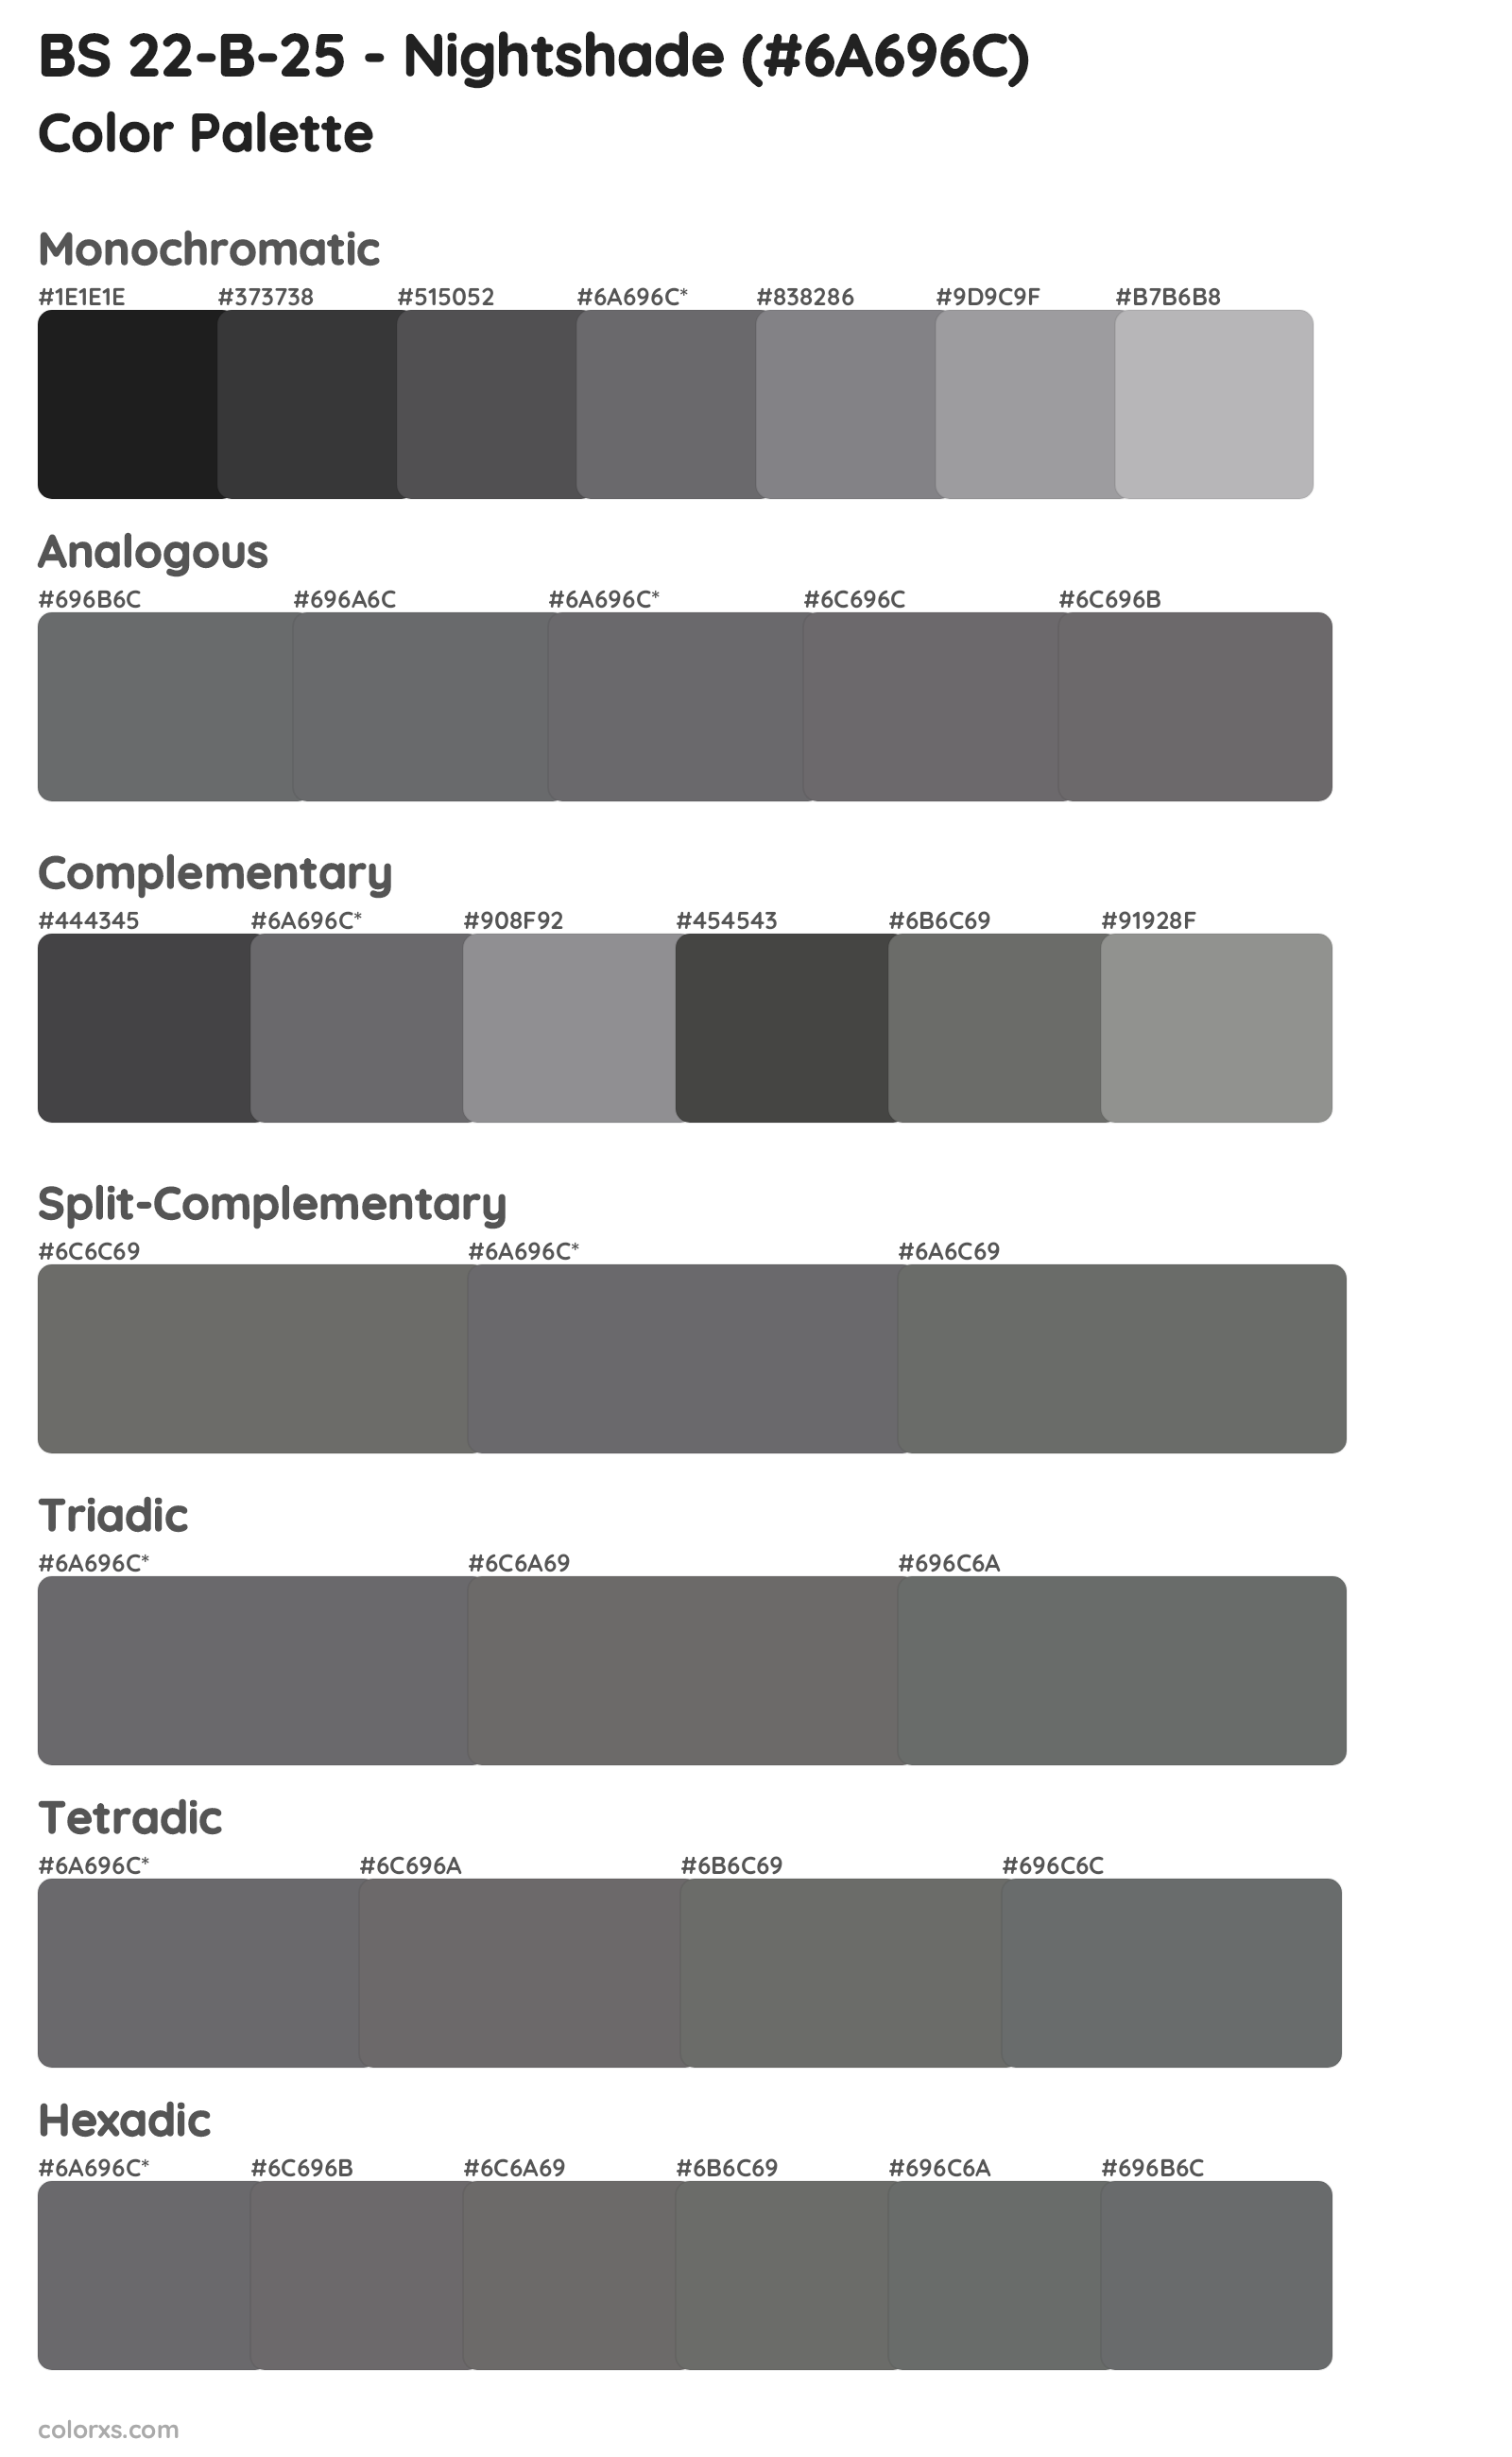 BS 22-B-25 - Nightshade Color Scheme Palettes